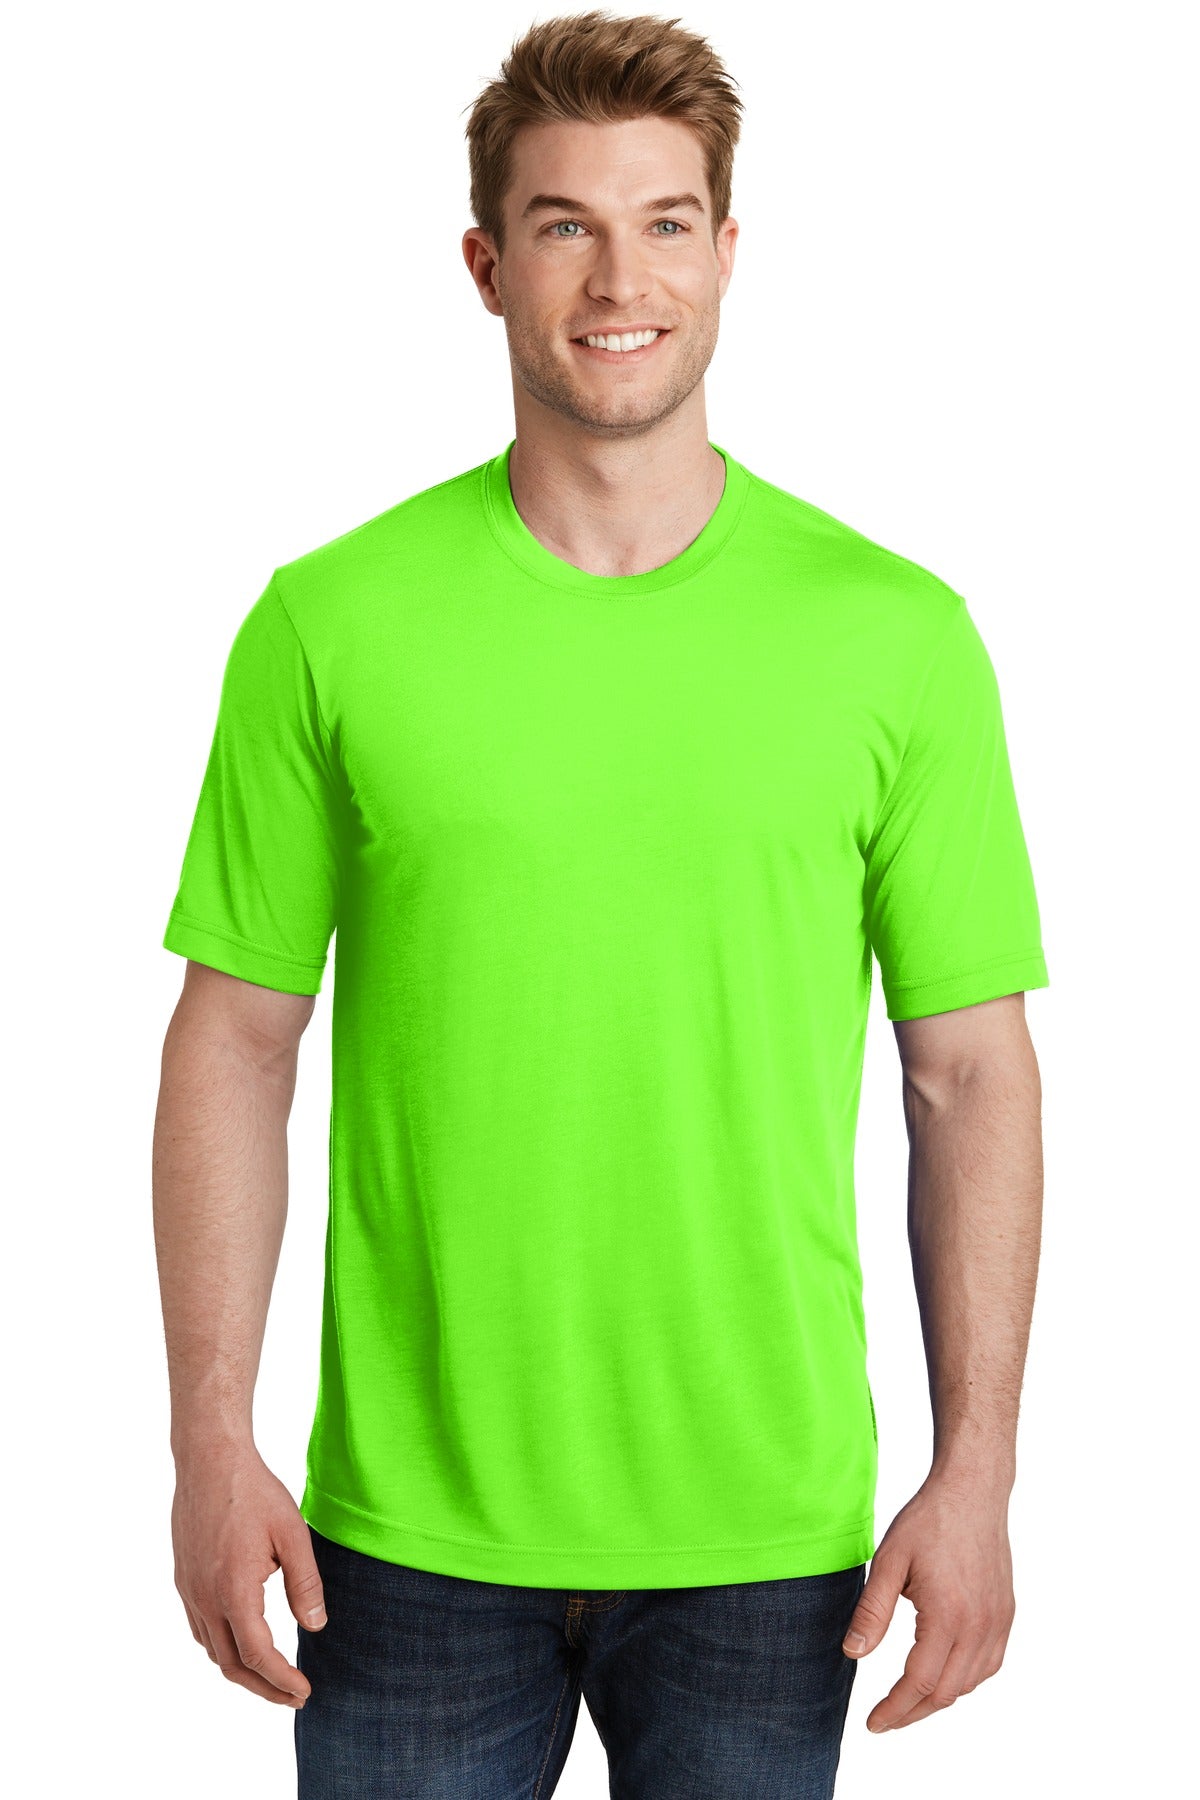 Photo of Sport-Tek T-Shirts ST450  color  Neon Green